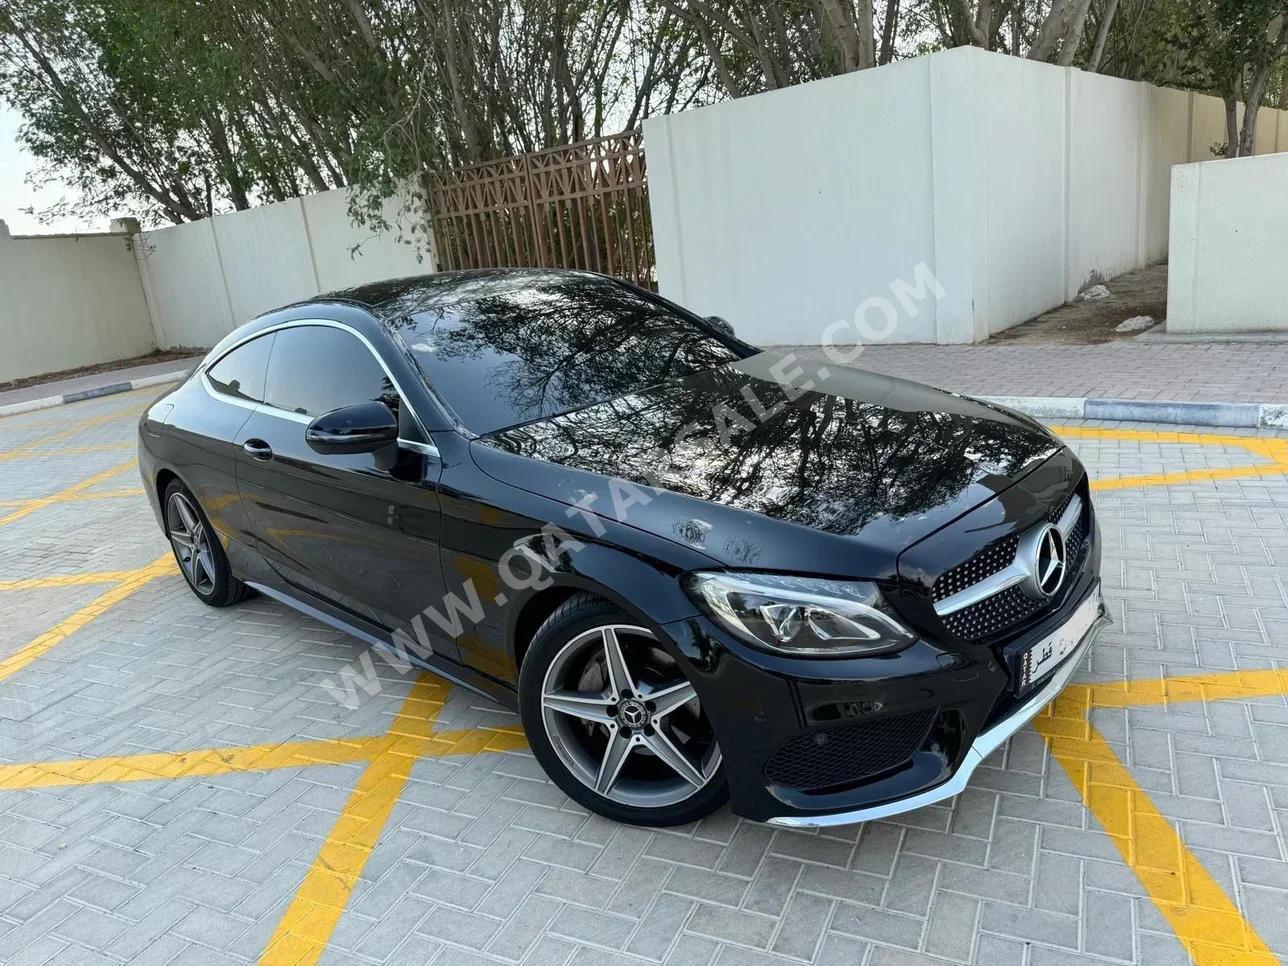 Mercedes-Benz  C-Class  200  2018  Automatic  129,000 Km  4 Cylinder  Rear Wheel Drive (RWD)  Sedan  Black